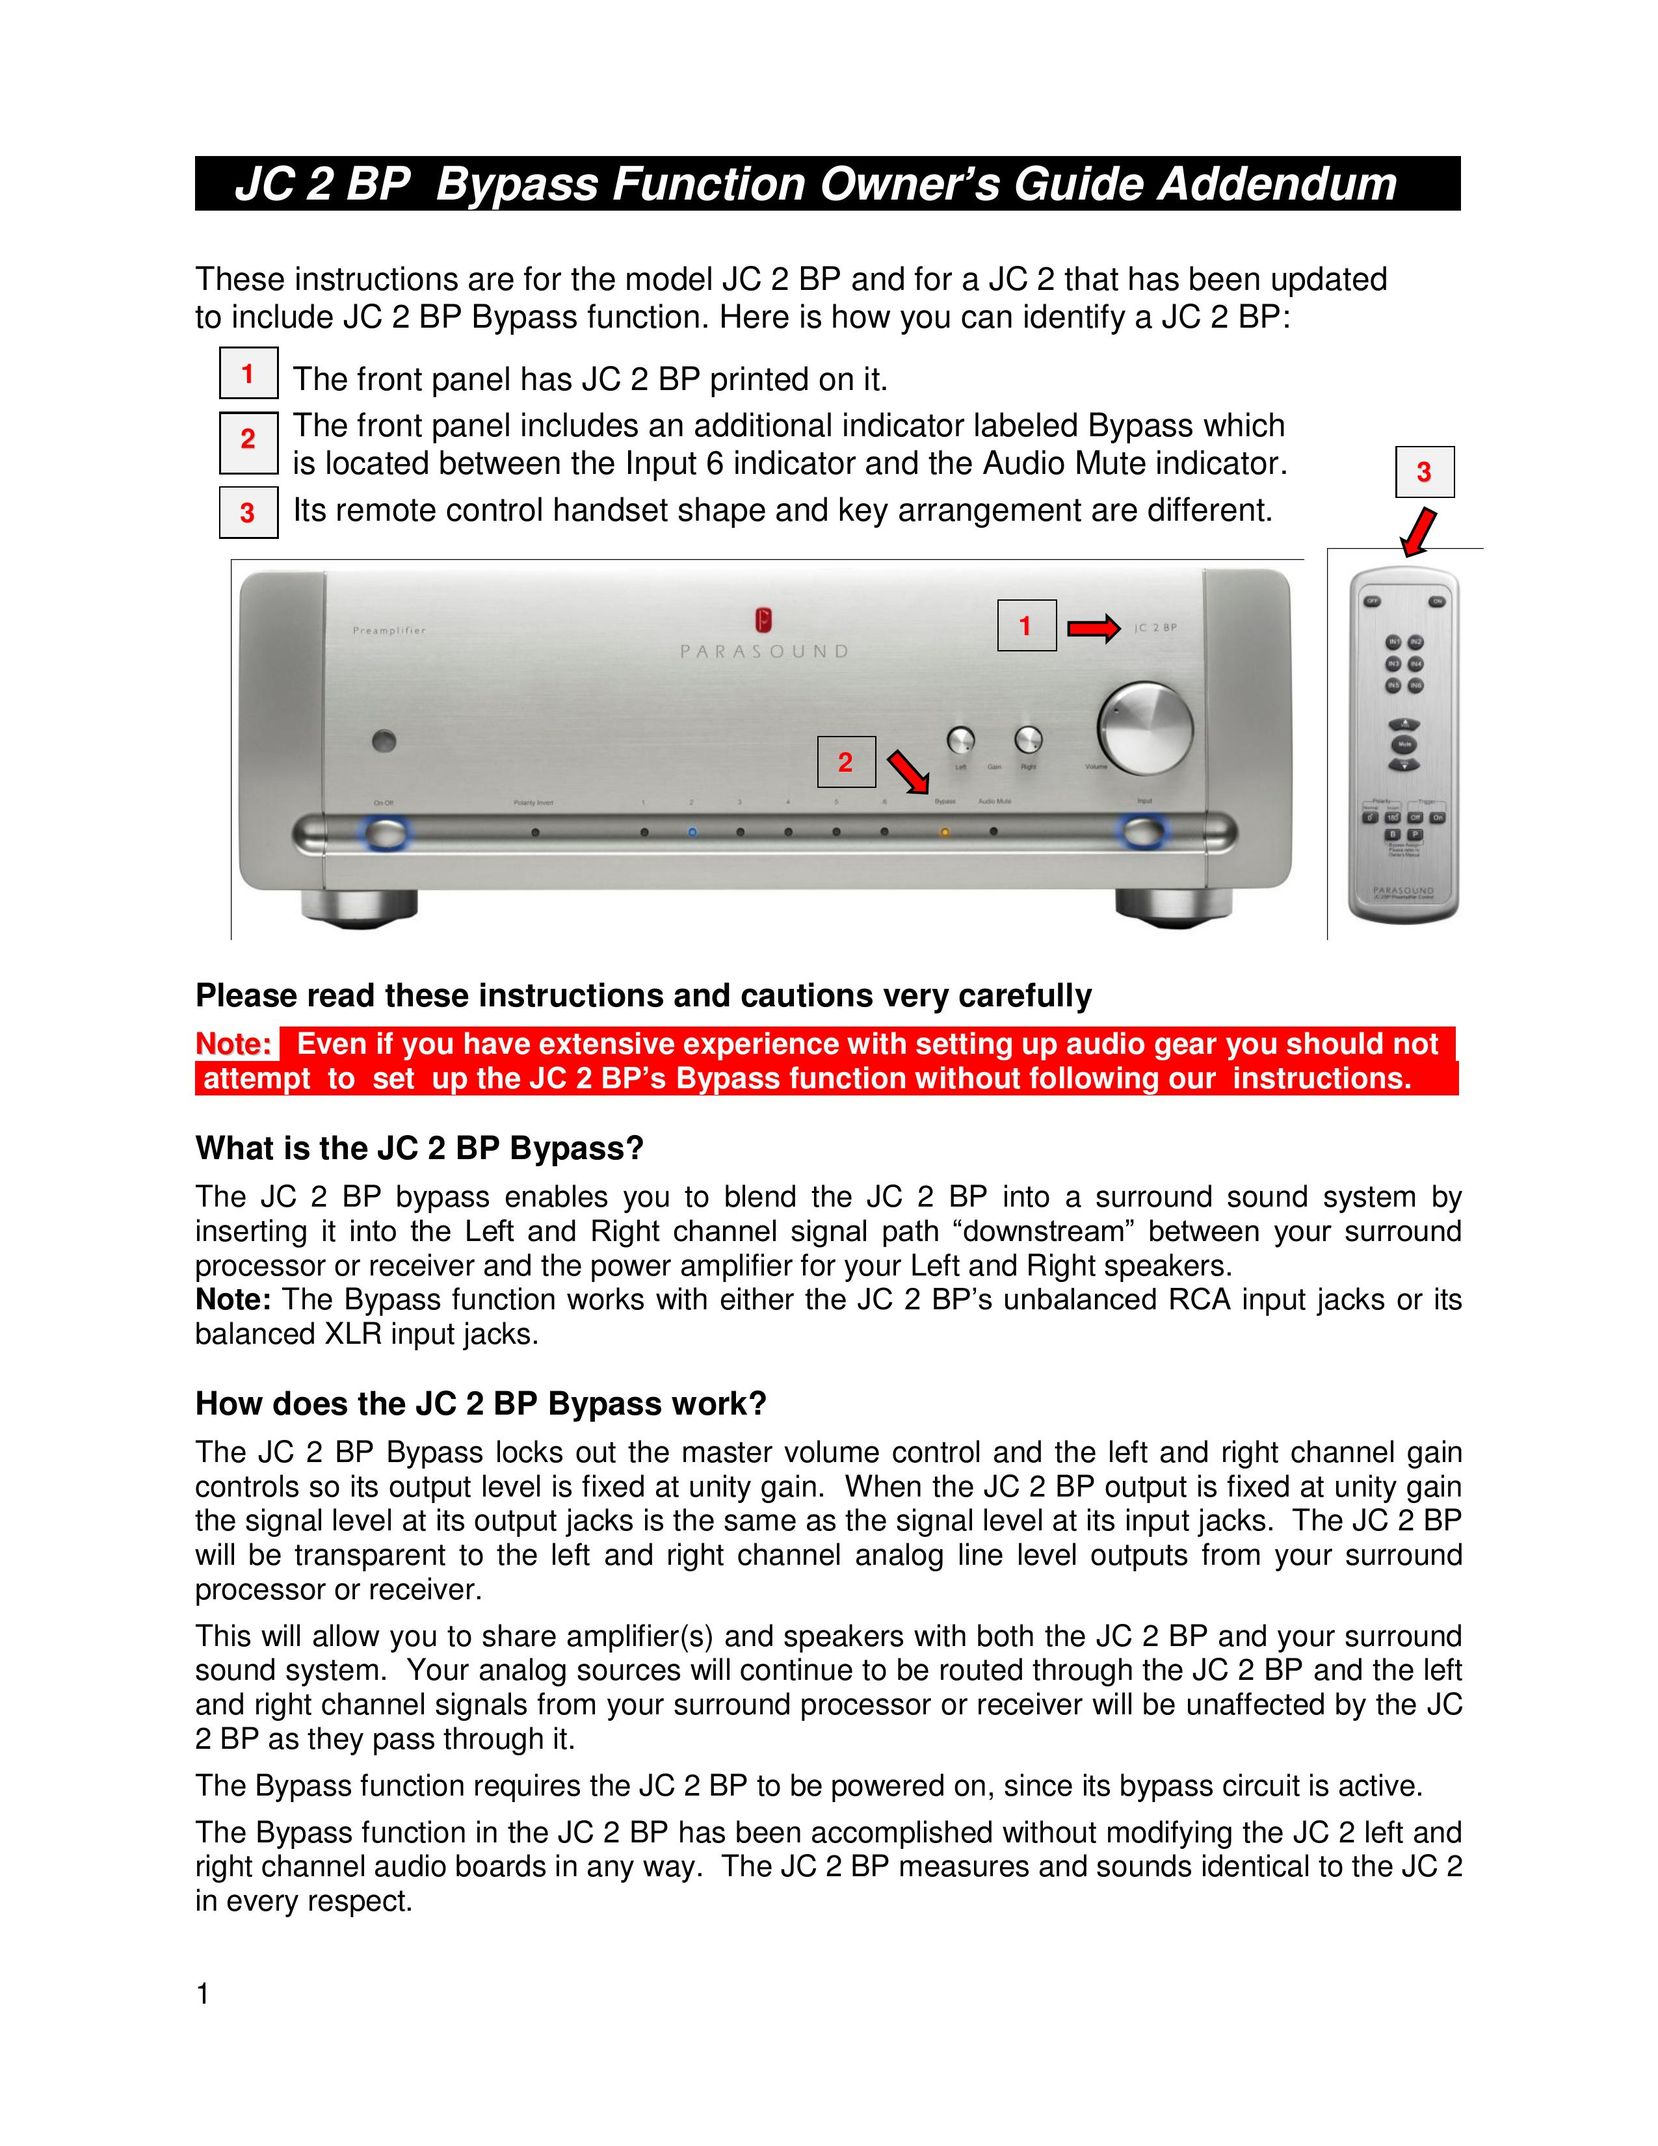 Parasound JC 2 Stereo Amplifier User Manual